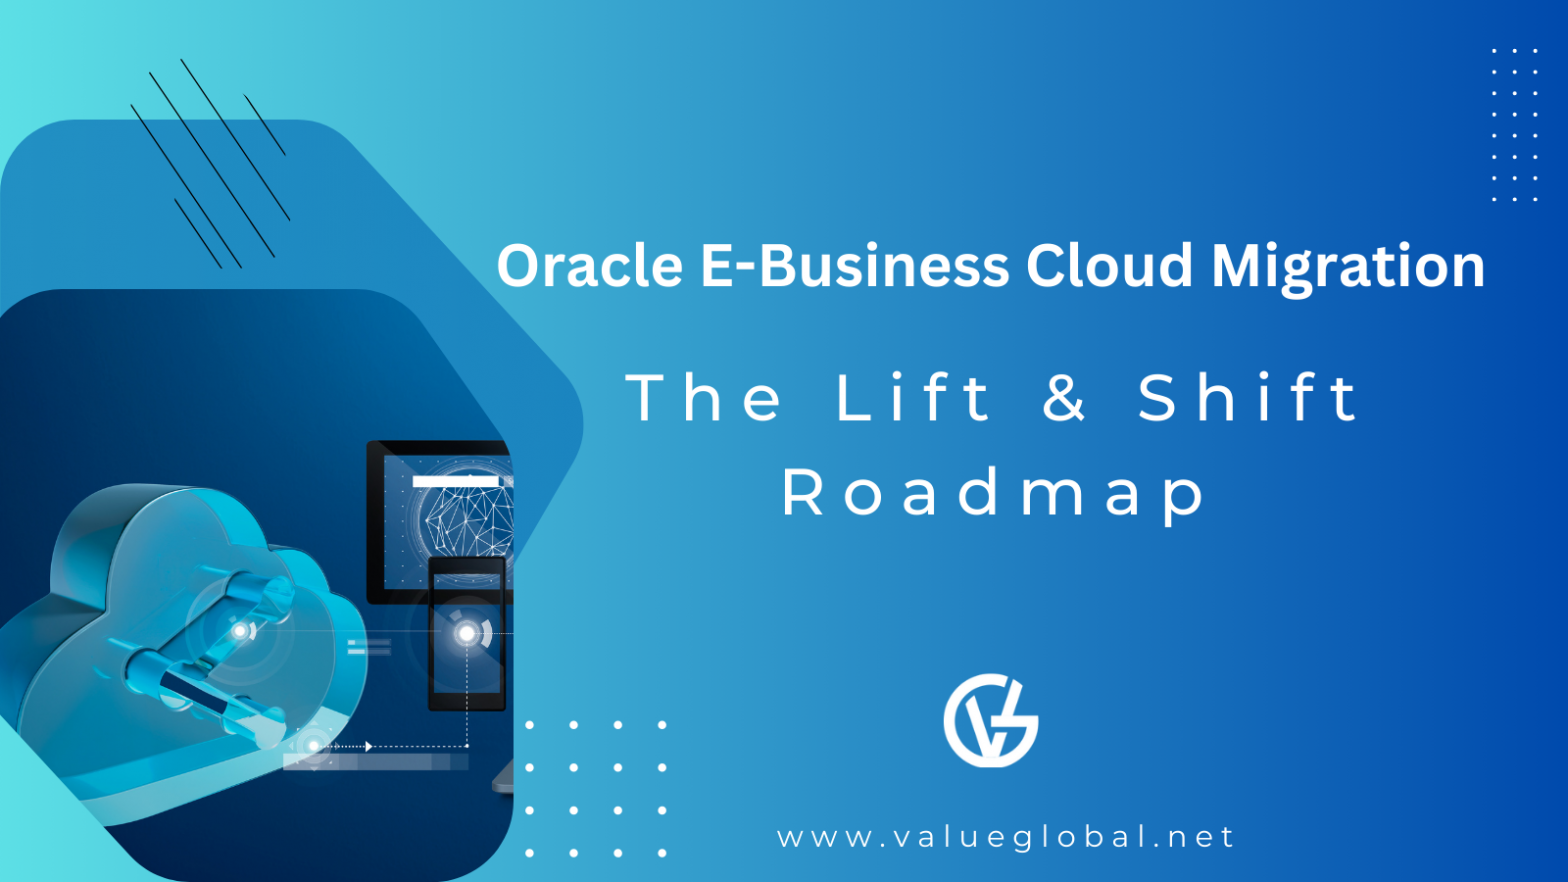 Oracle E-Business cloud migration: The Lift & Shift Roadmap